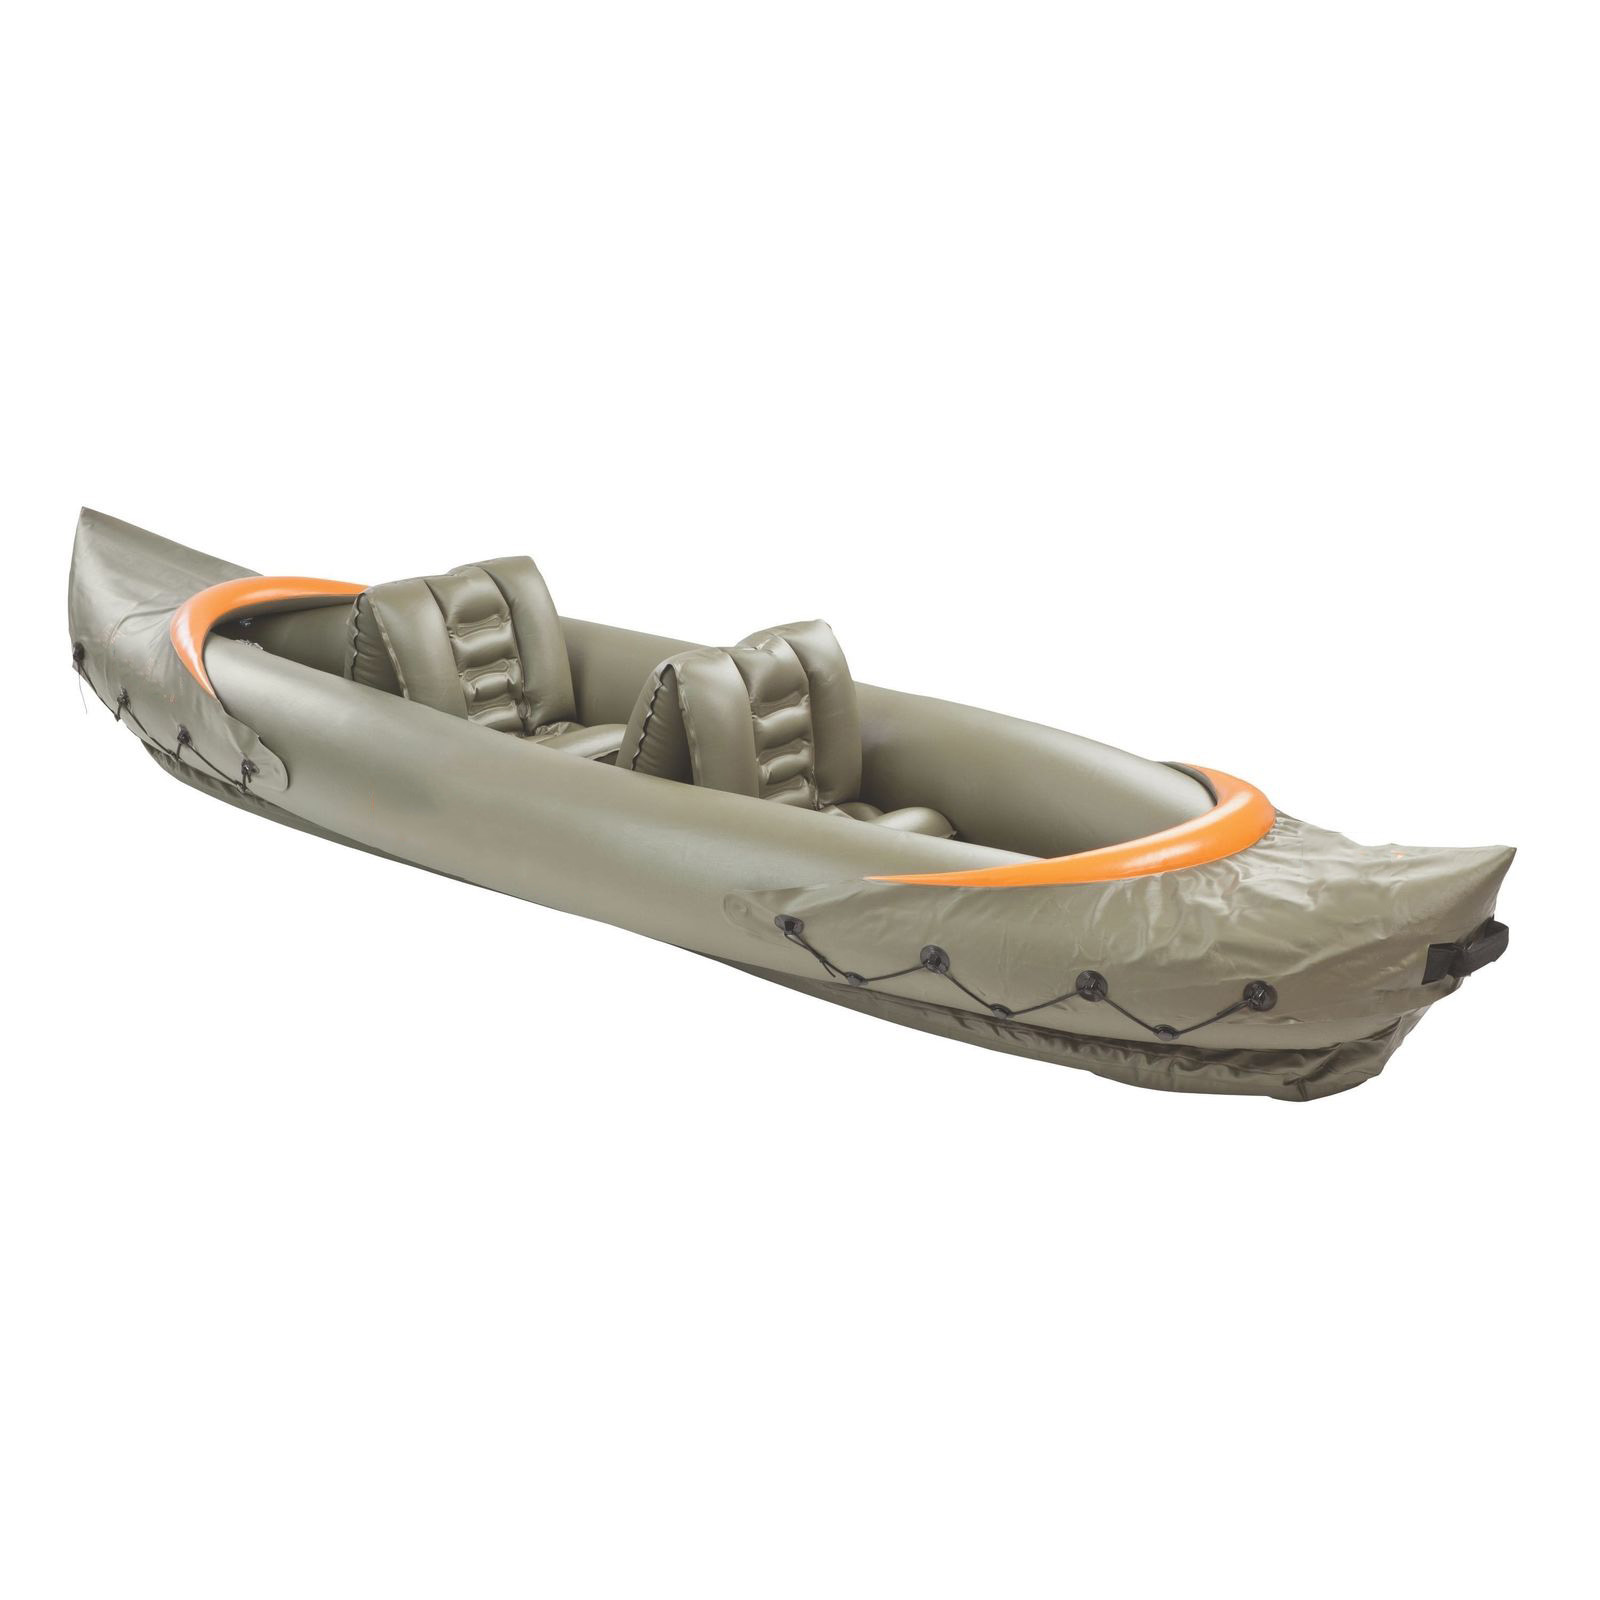 PVC Hull Material And 2.95mL Length Inflatable Kayaks